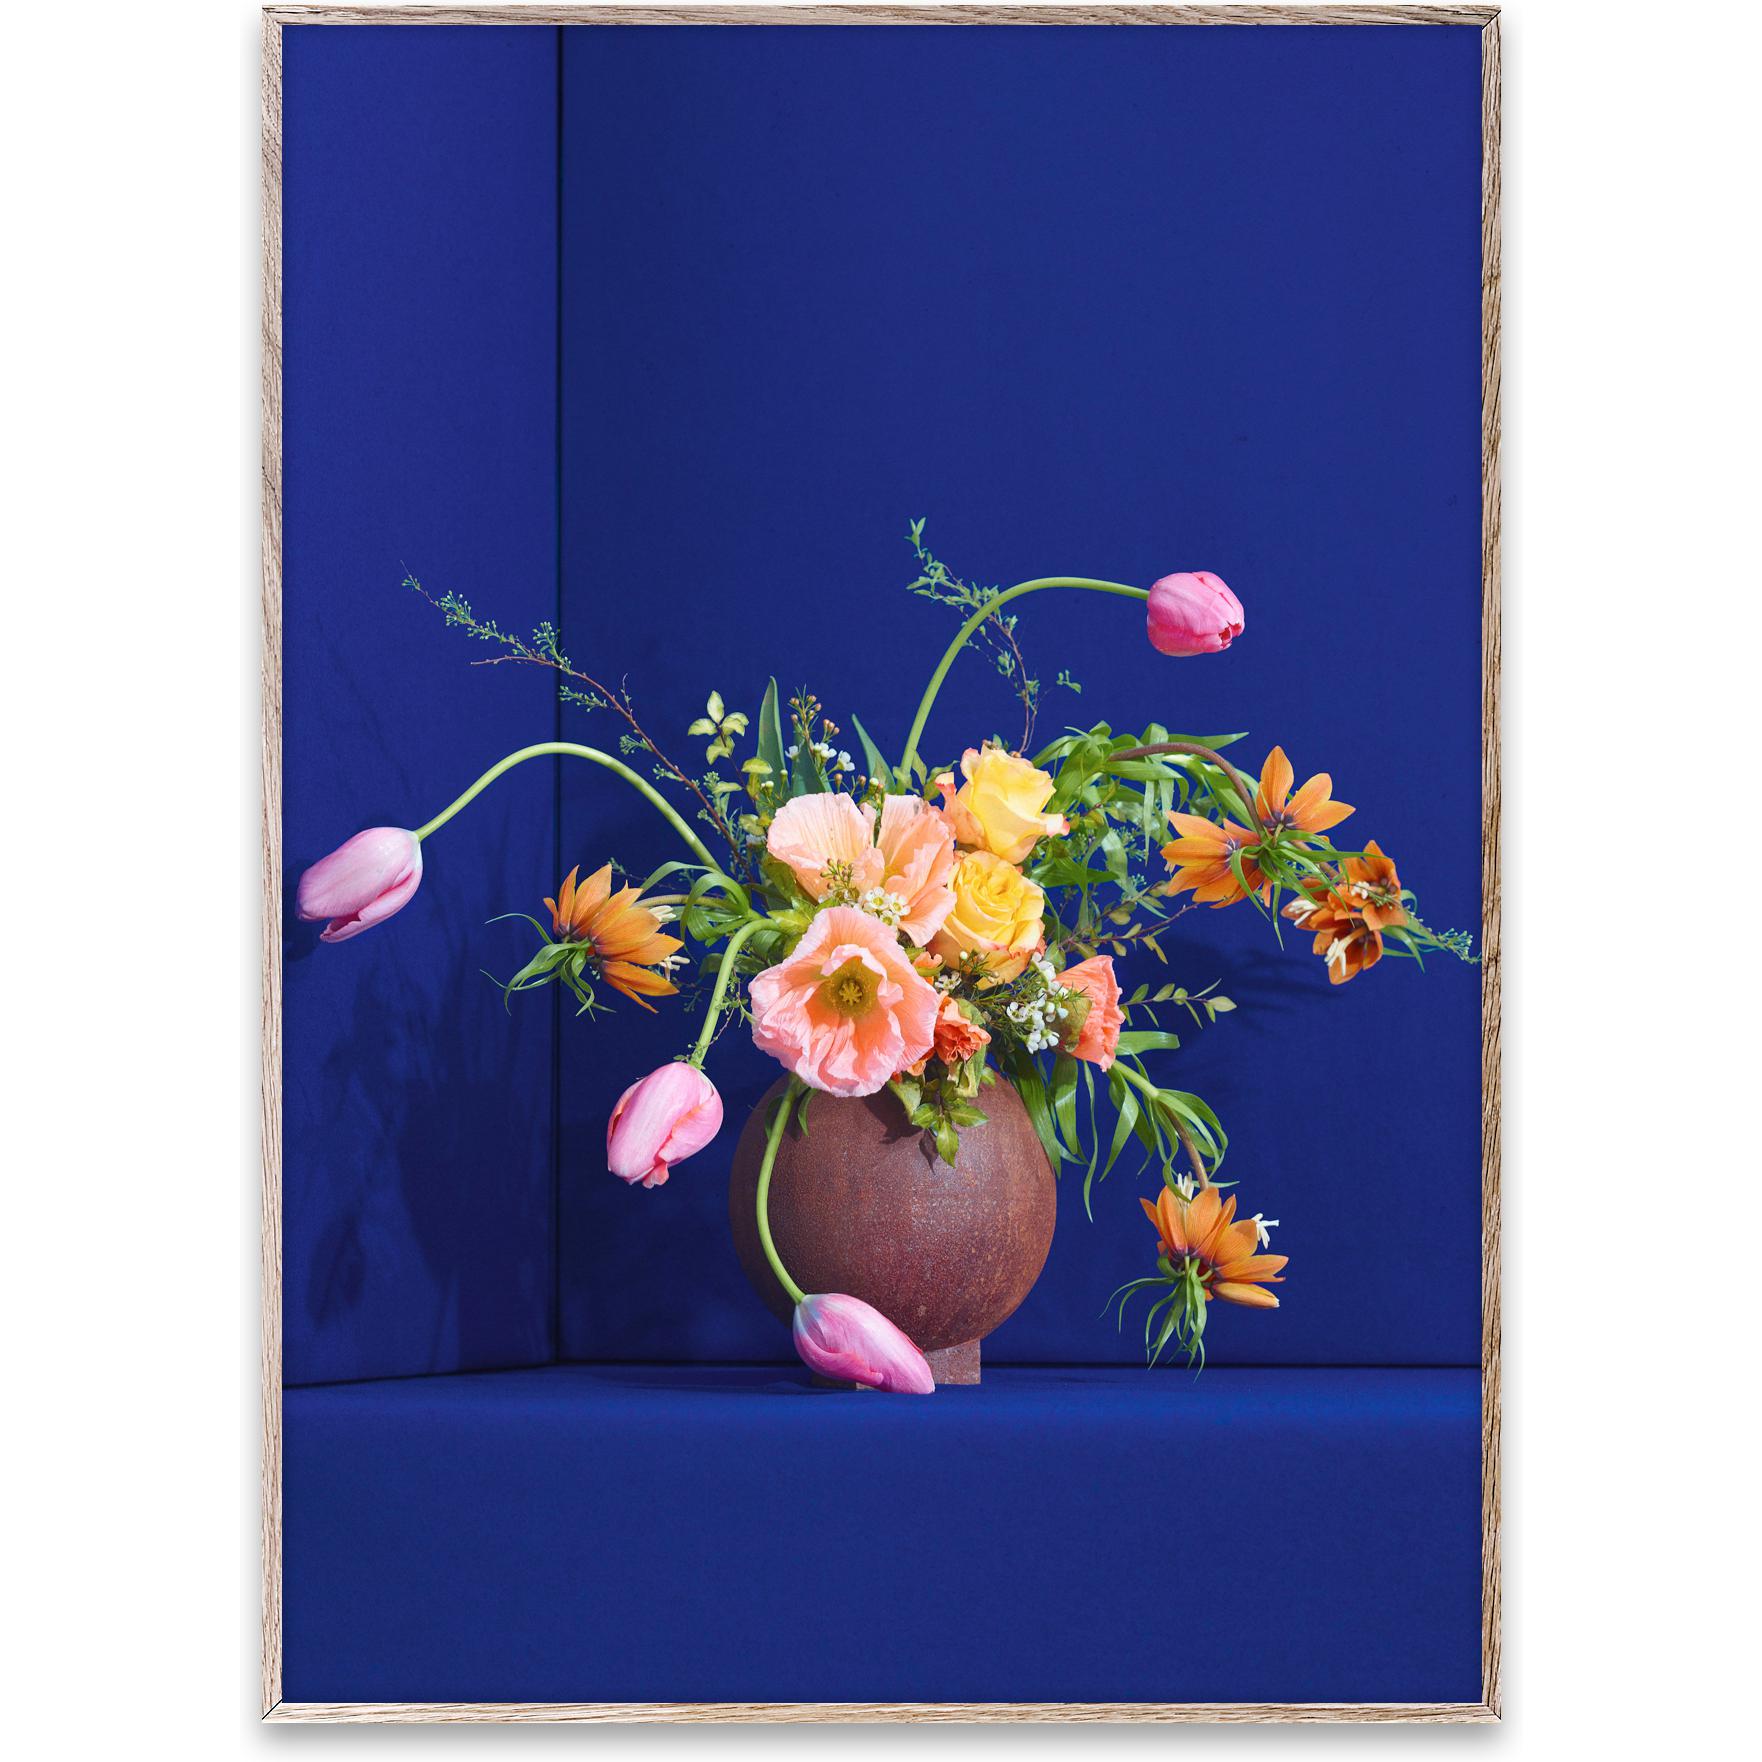 Paper Collective Blomst 01 Poster 30x40 cm, blå